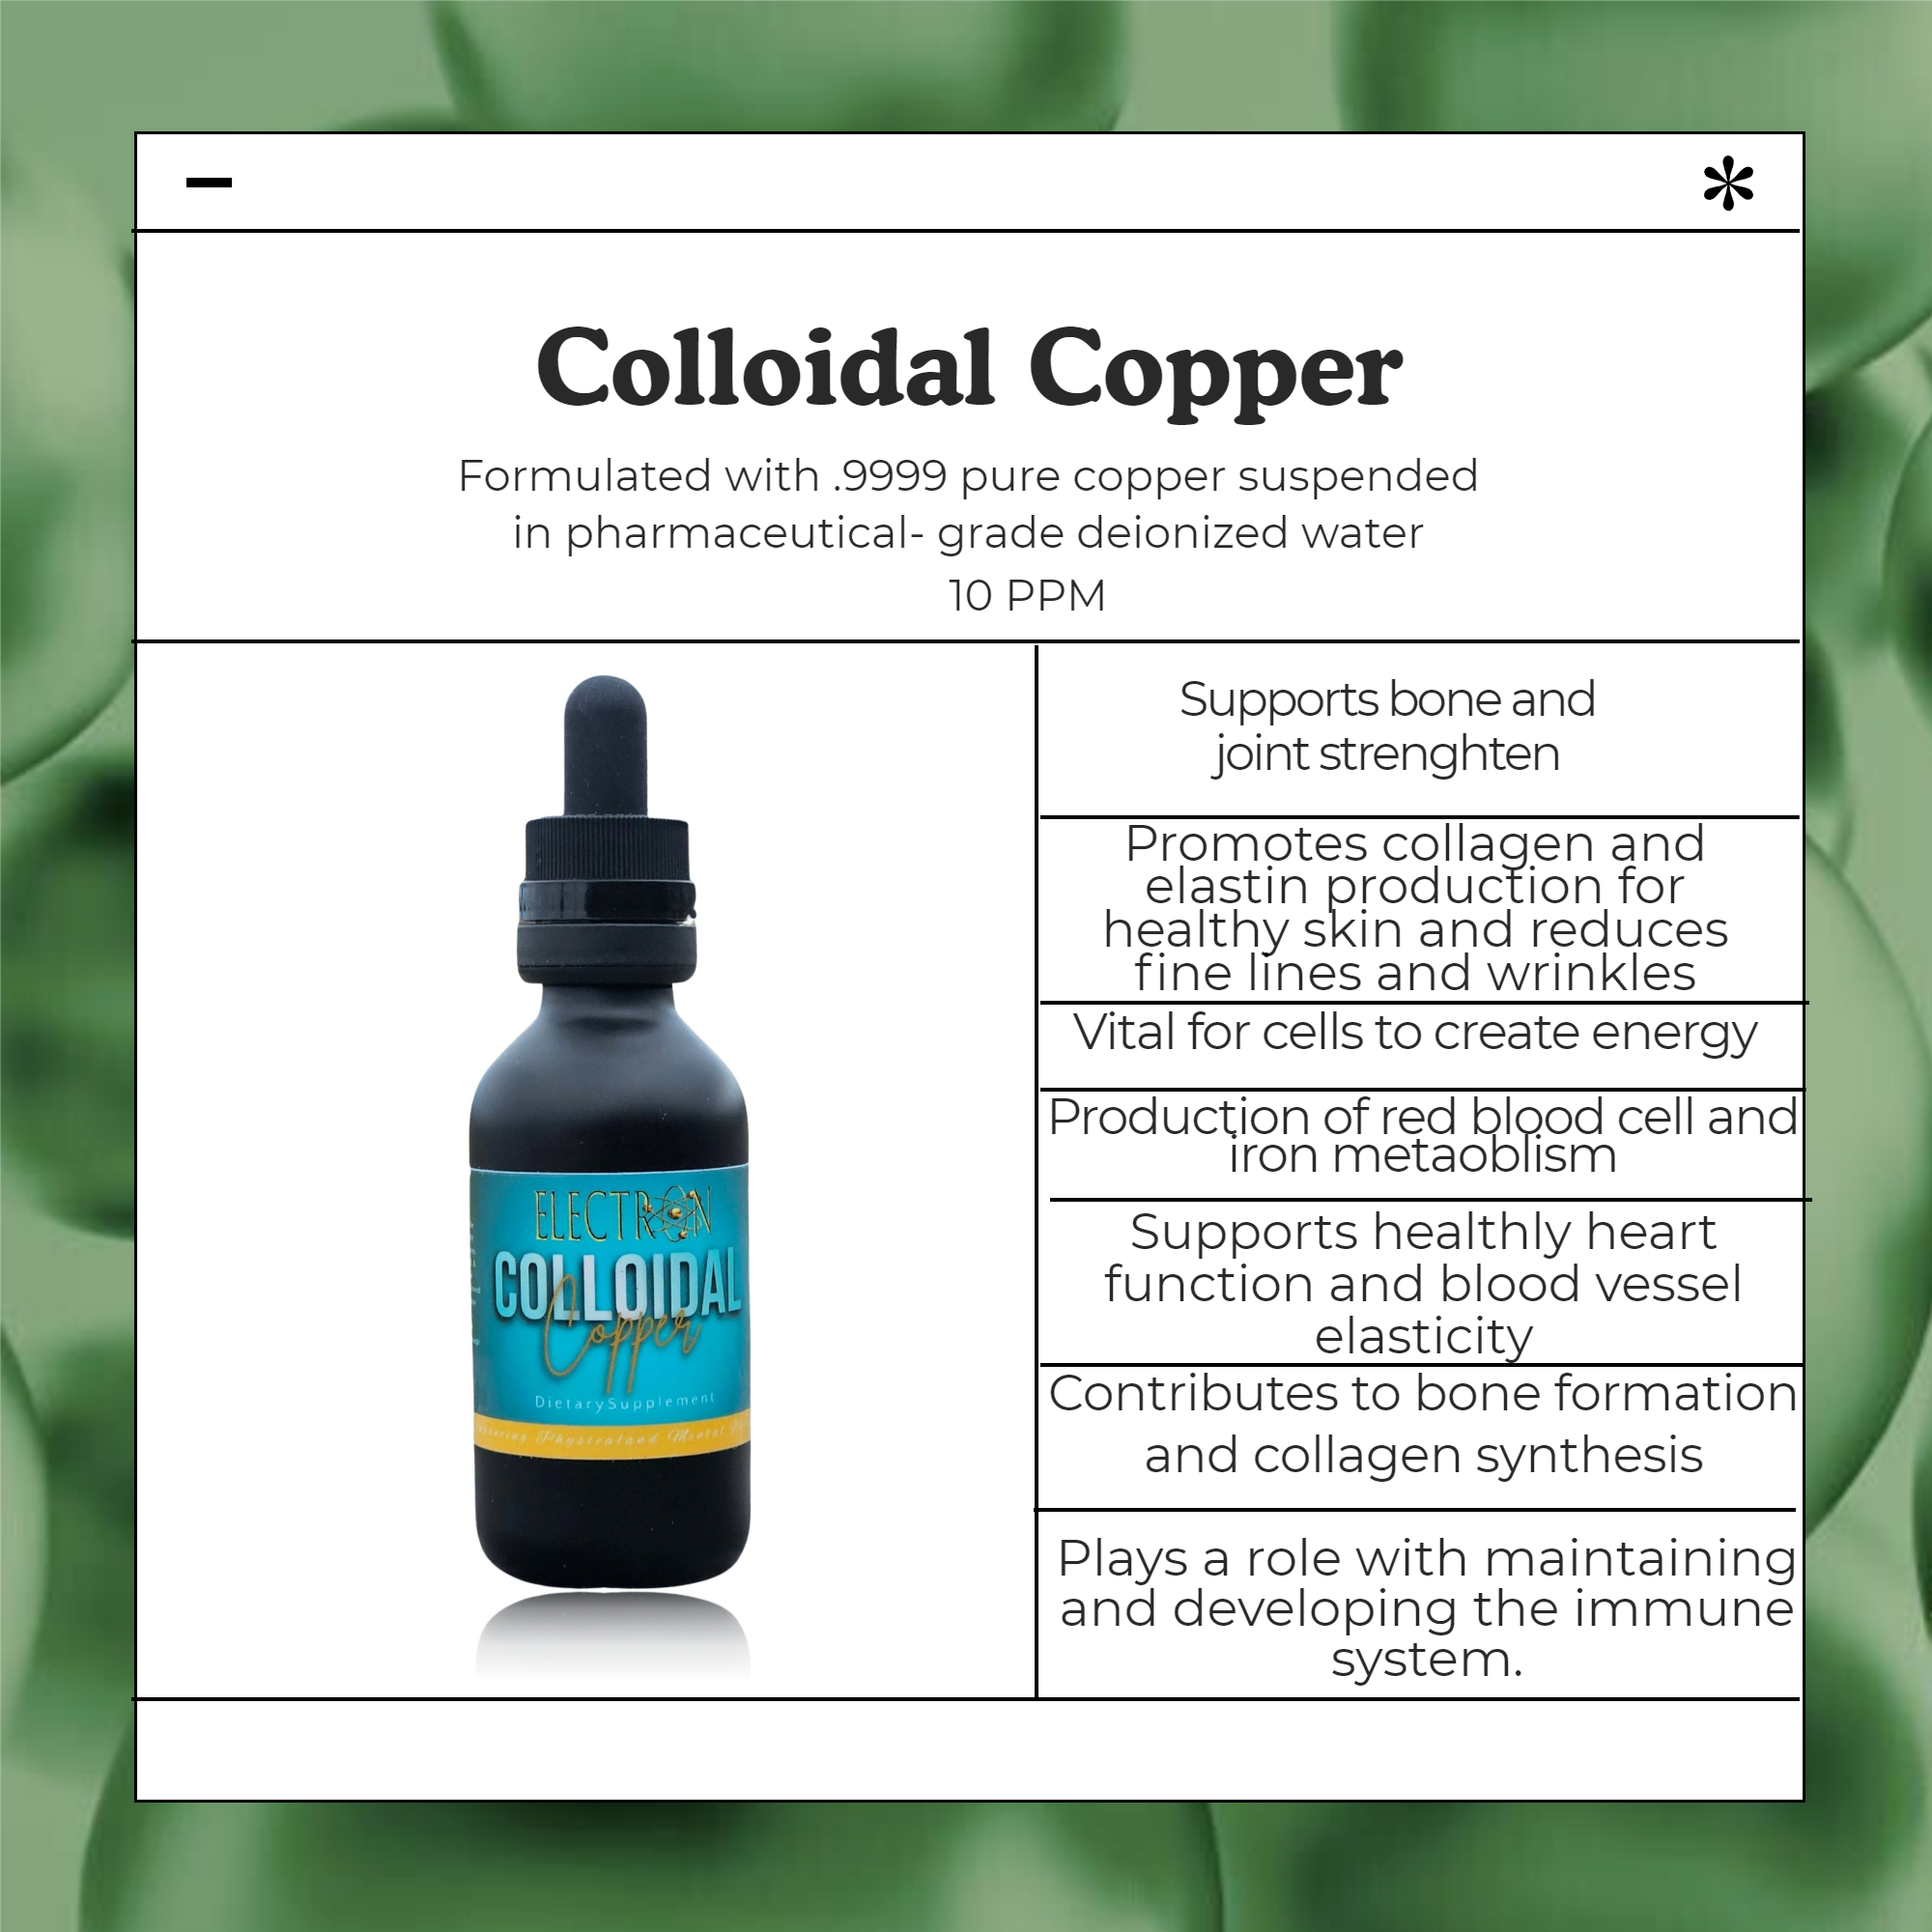 Colloidal Copper Benefits